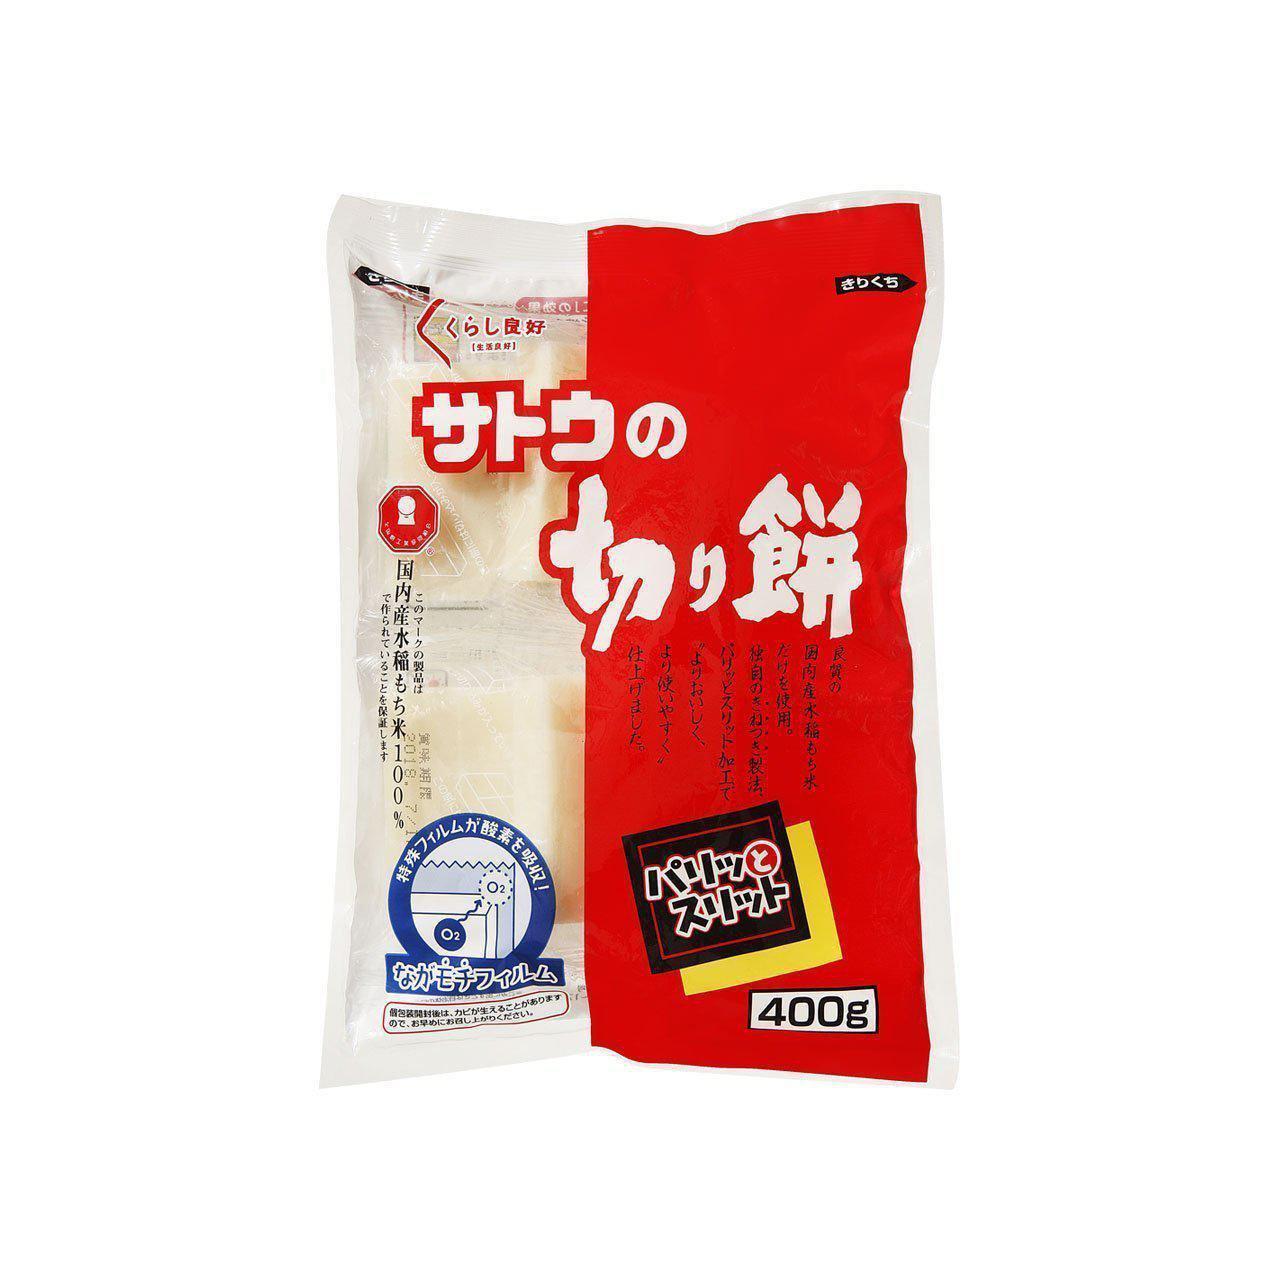 P-1-SAT-MOC-CK-400-Sato Kirimochi Dried Japanese Rice Cake 400g.jpg